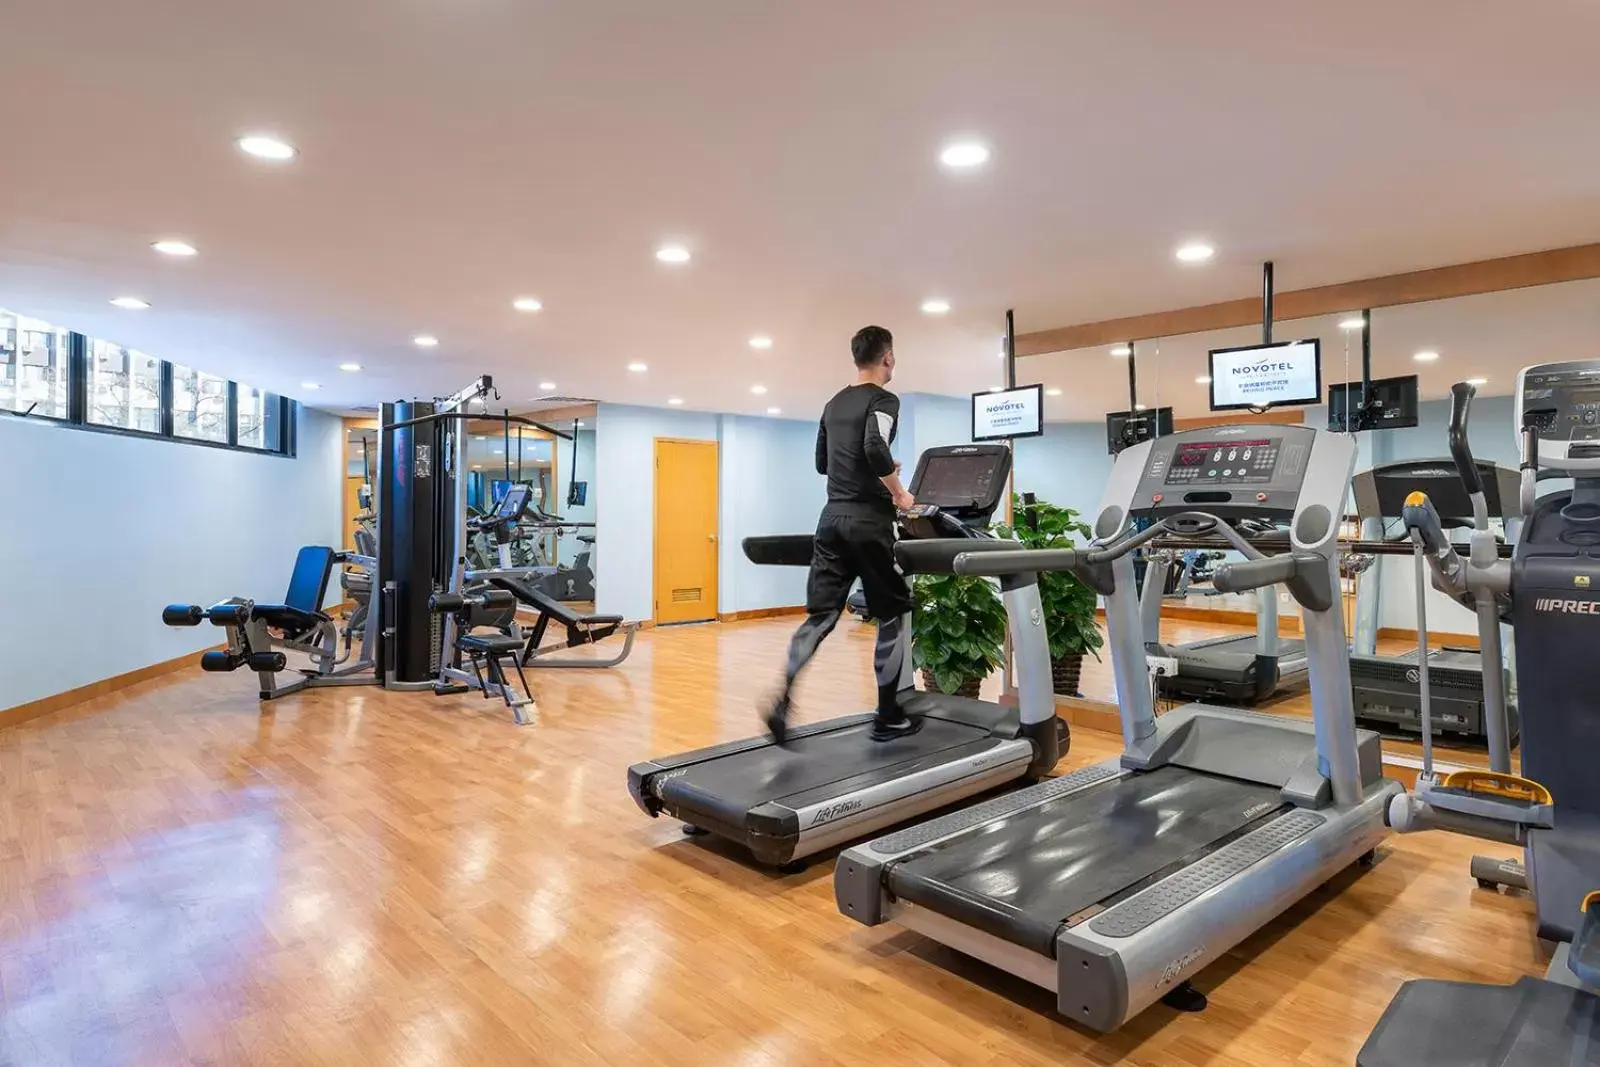 Fitness centre/facilities, Fitness Center/Facilities in Novotel Beijing Peace